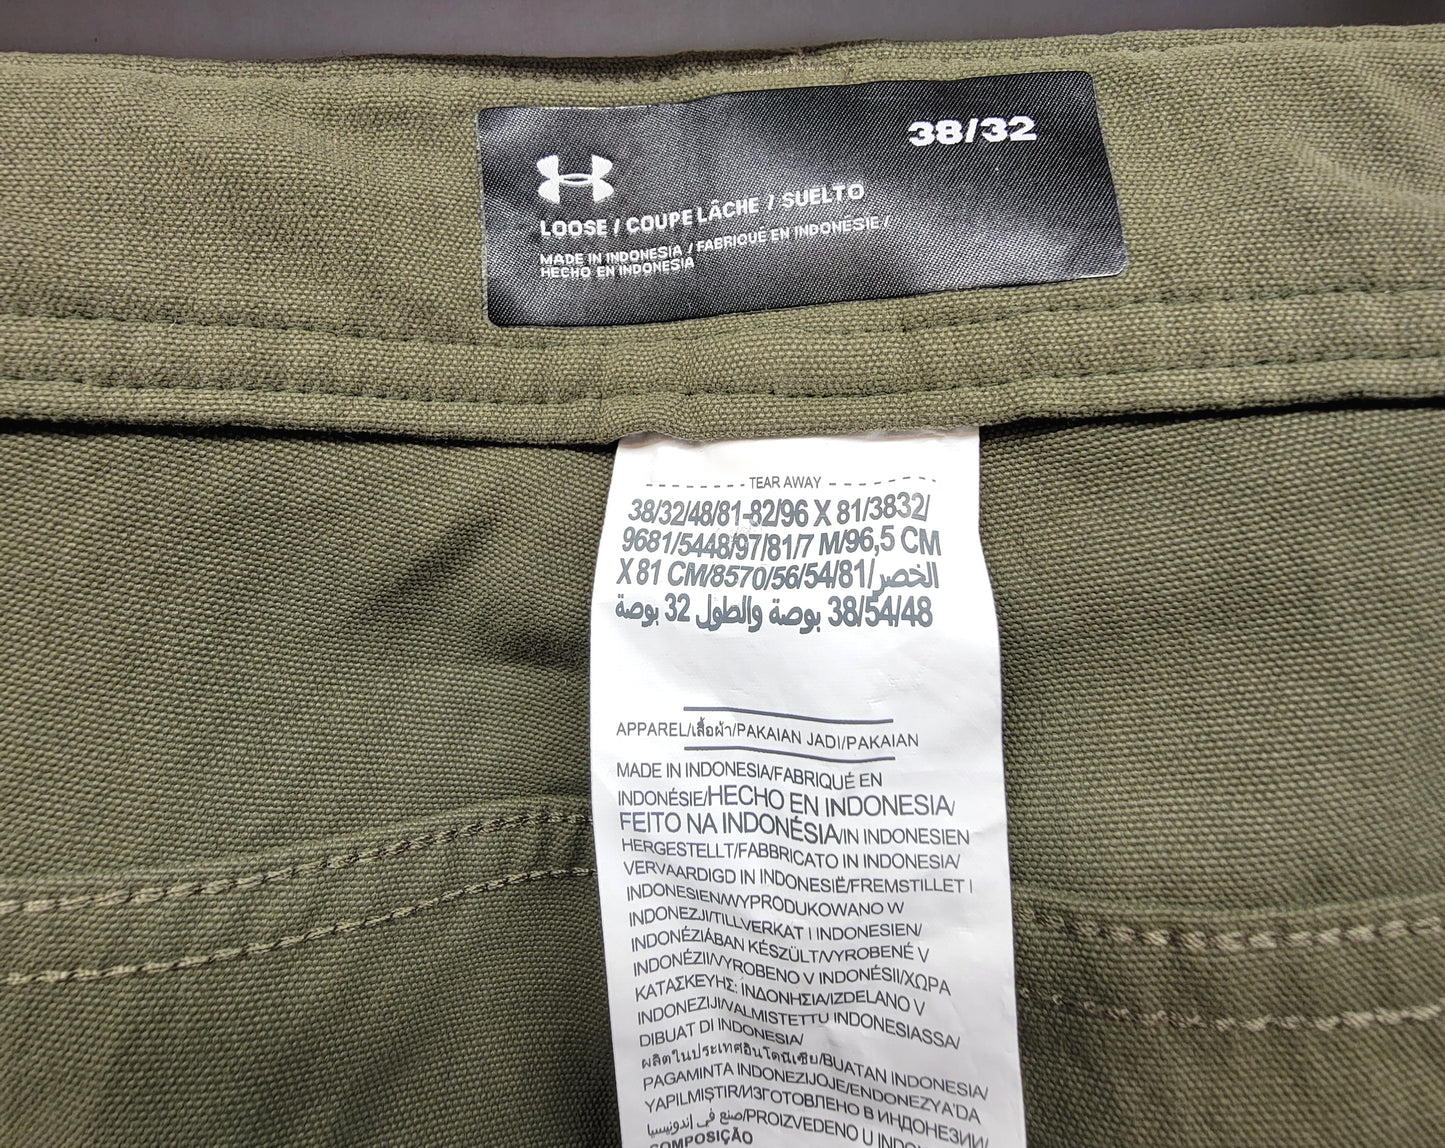 Under Armour Men's Size 38/32 Loose Fit Pants Green Retail $70.00